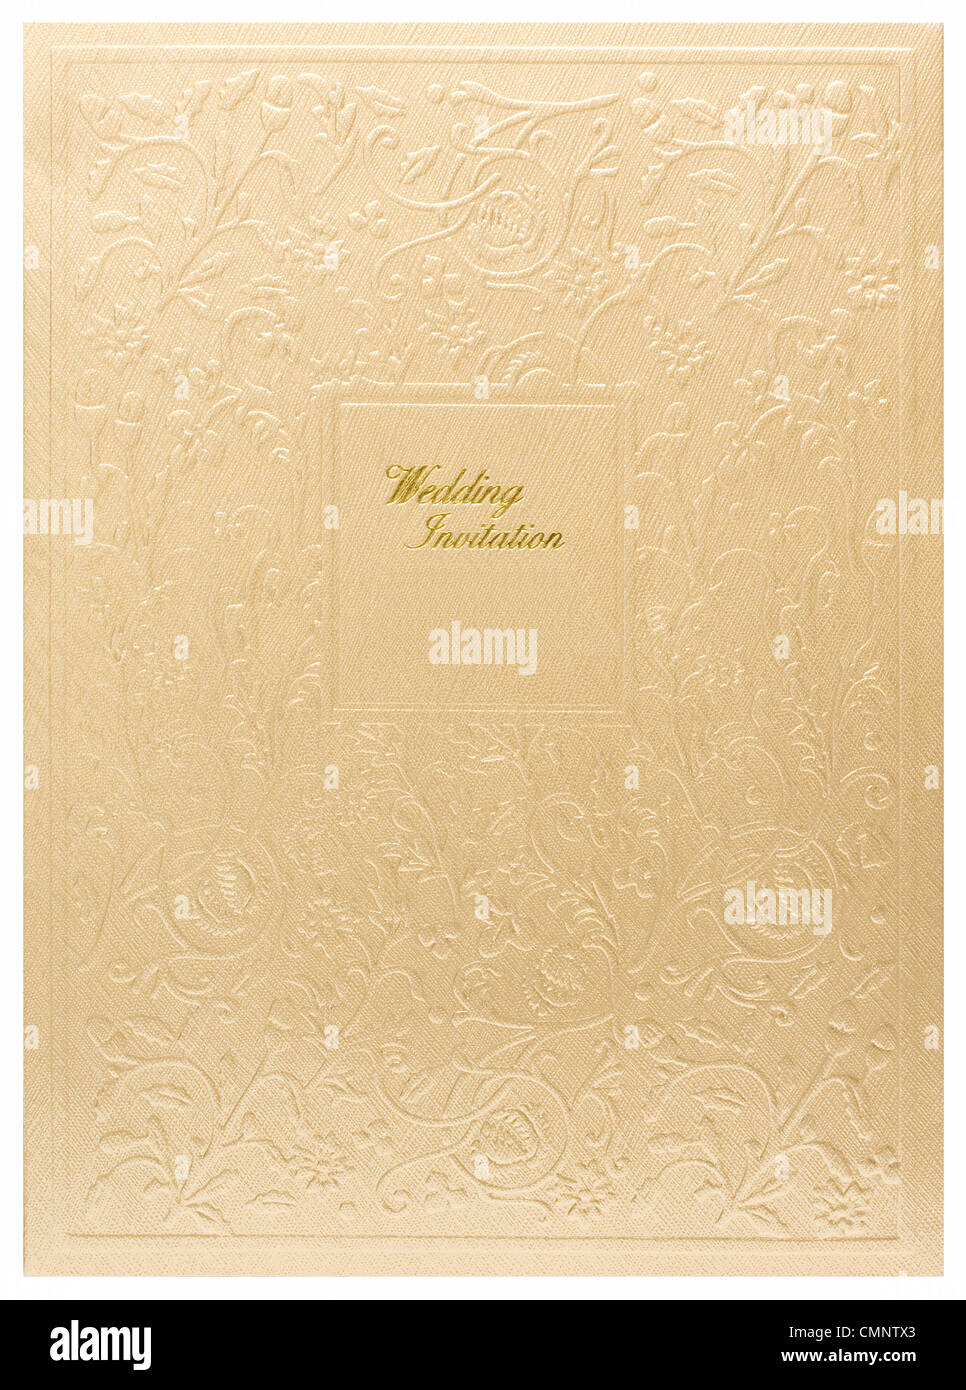 Gold wedding invitation card background Stock Photo - Alamy